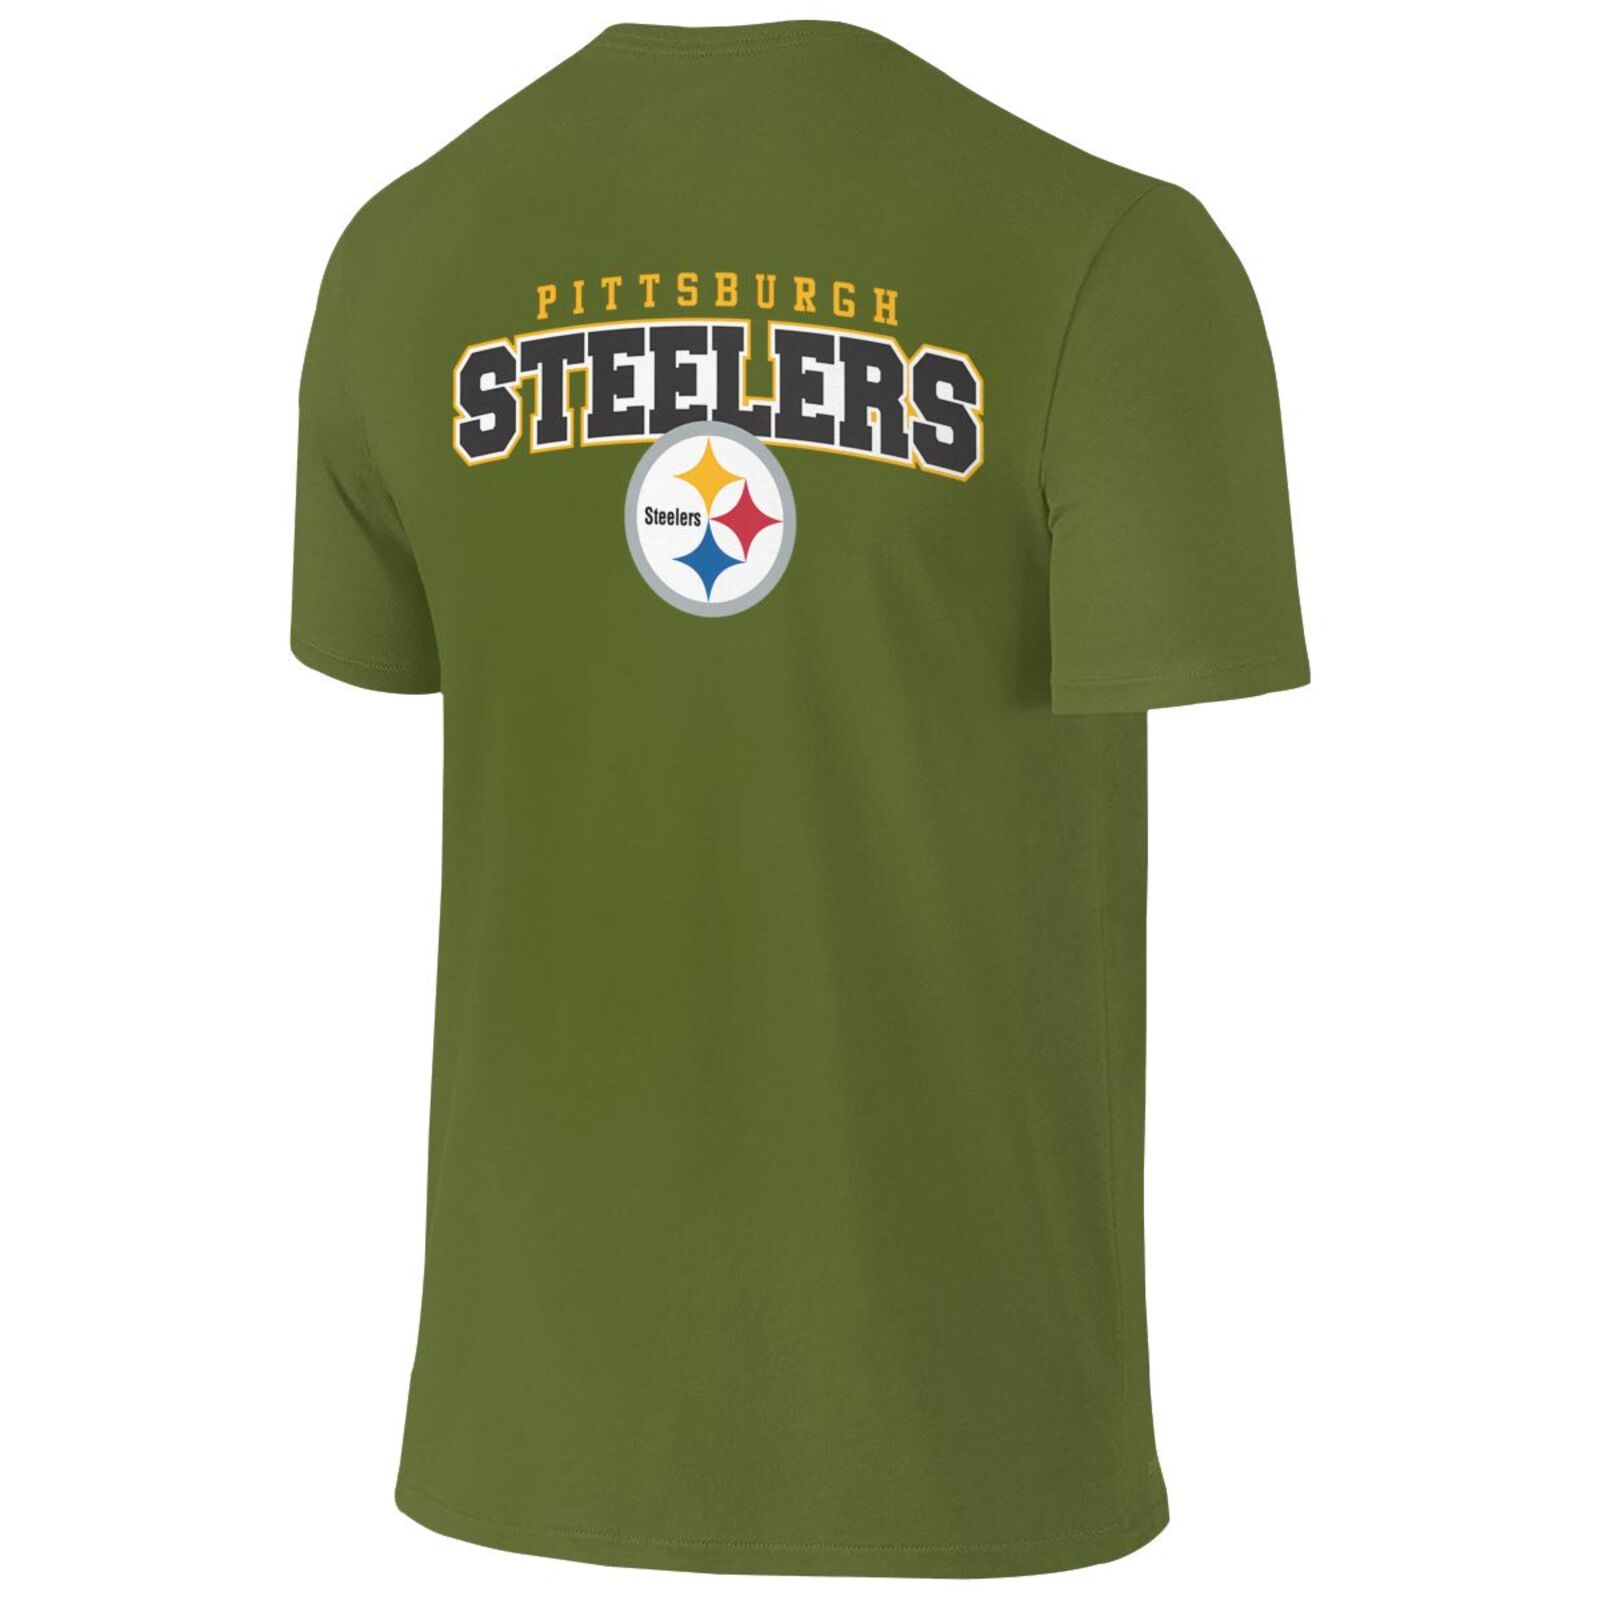 Pittsburgh_Steelers Men's Fan Cotton T-Shirt Crew Neck Print Top ...